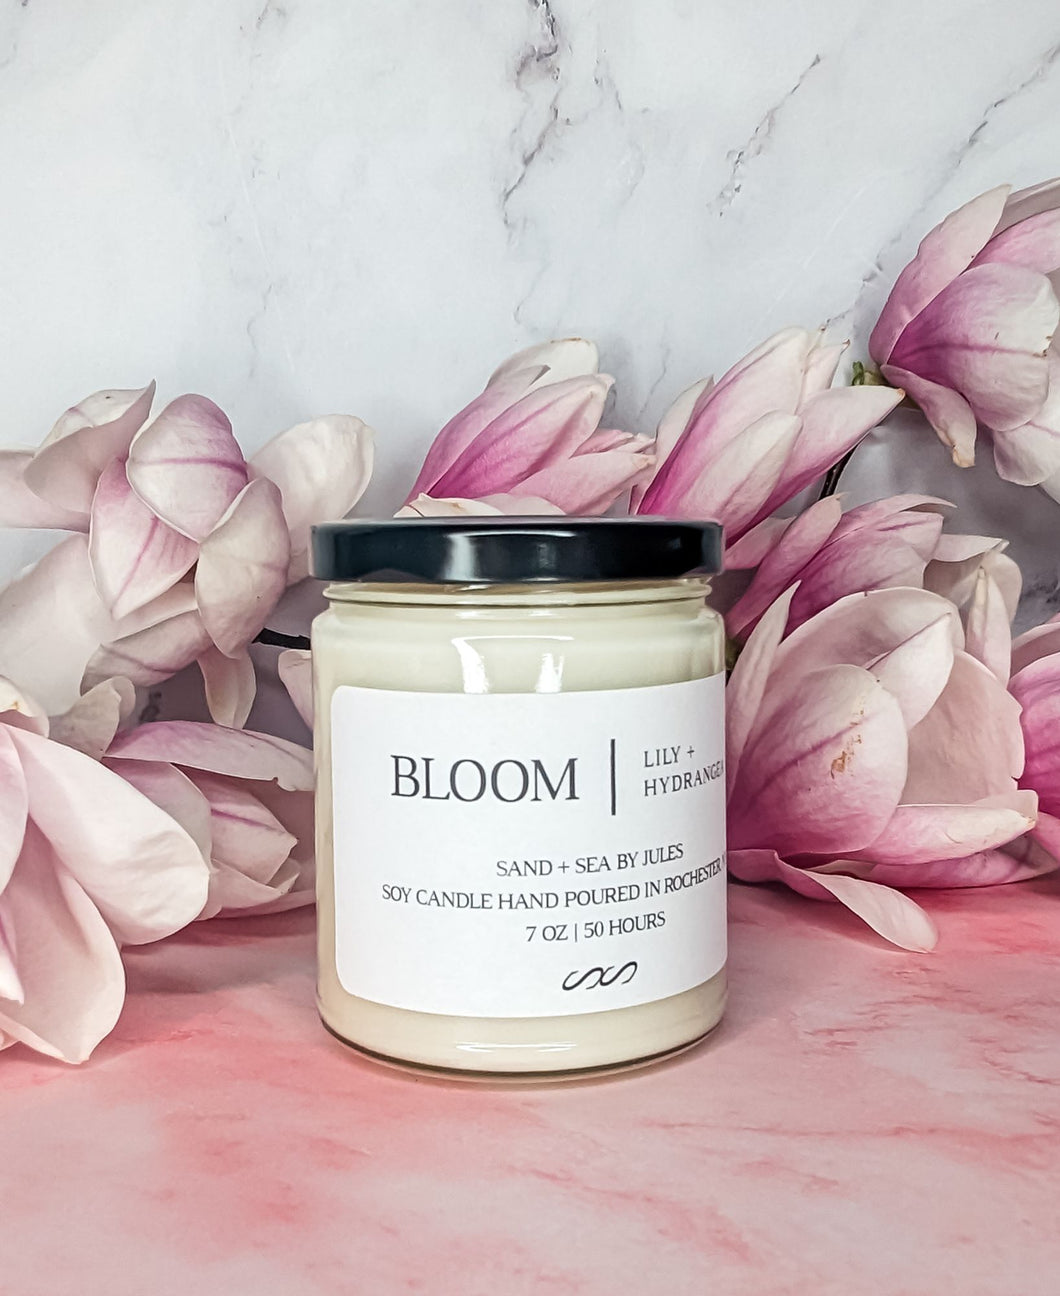 Bloom: Lily + Hydrangea